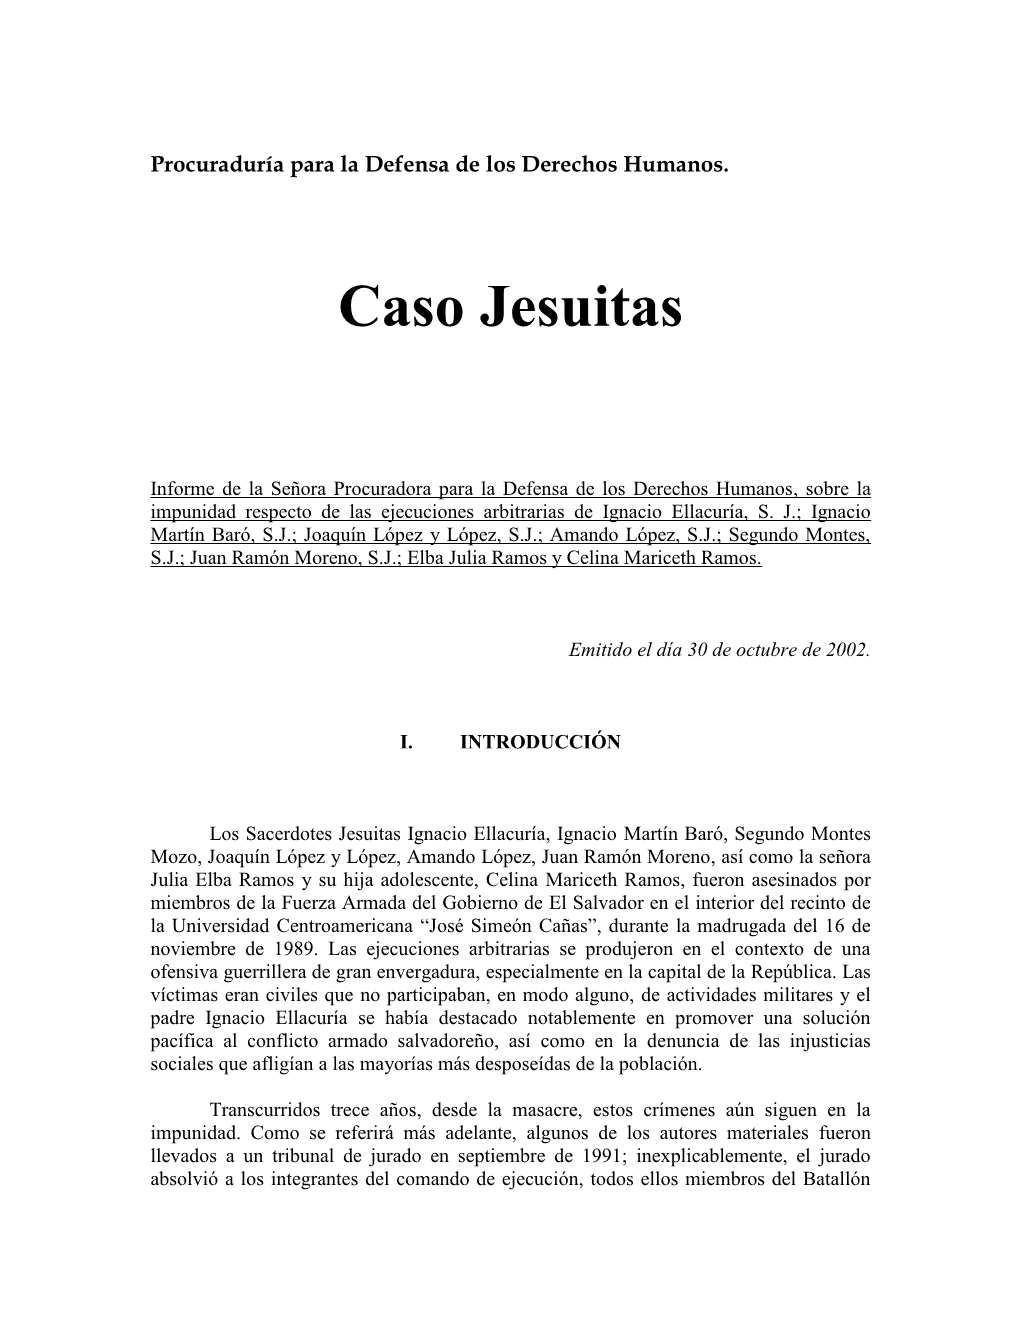 Caso Jesuitas